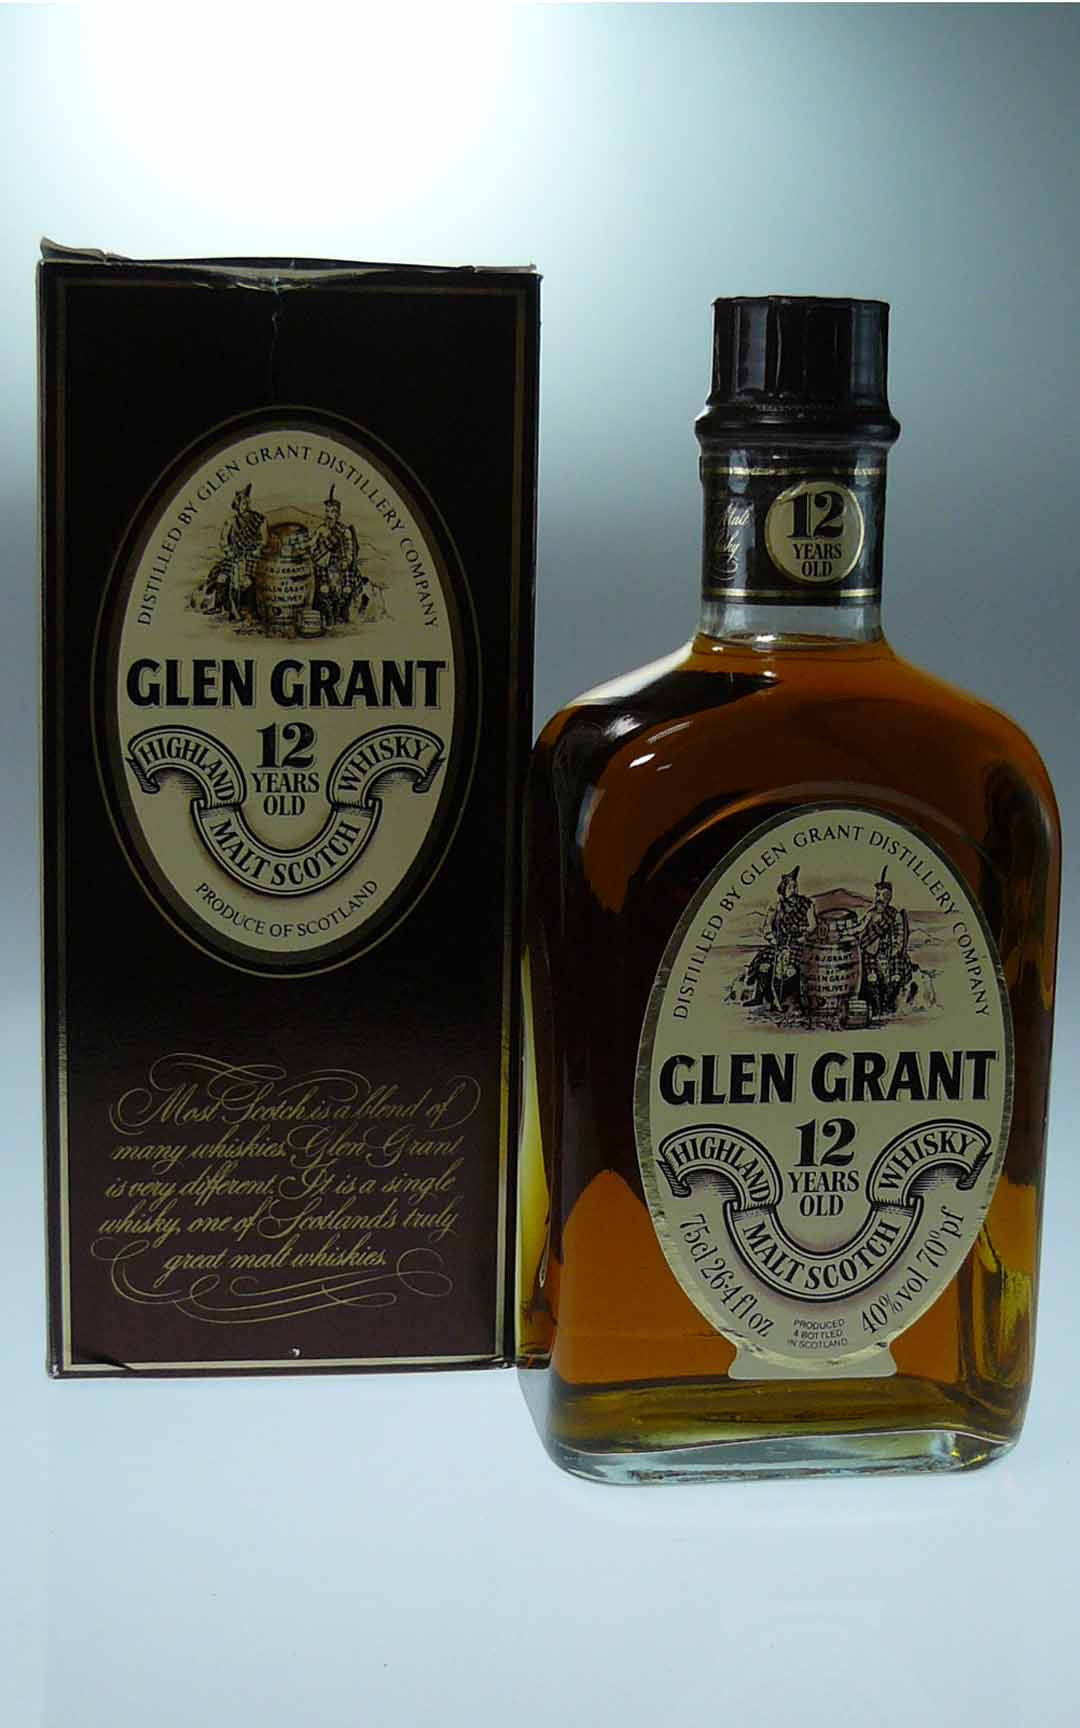 Glen Gant グレングラント12年 26.4fl.ozs.70proof 80年代初頭流通品